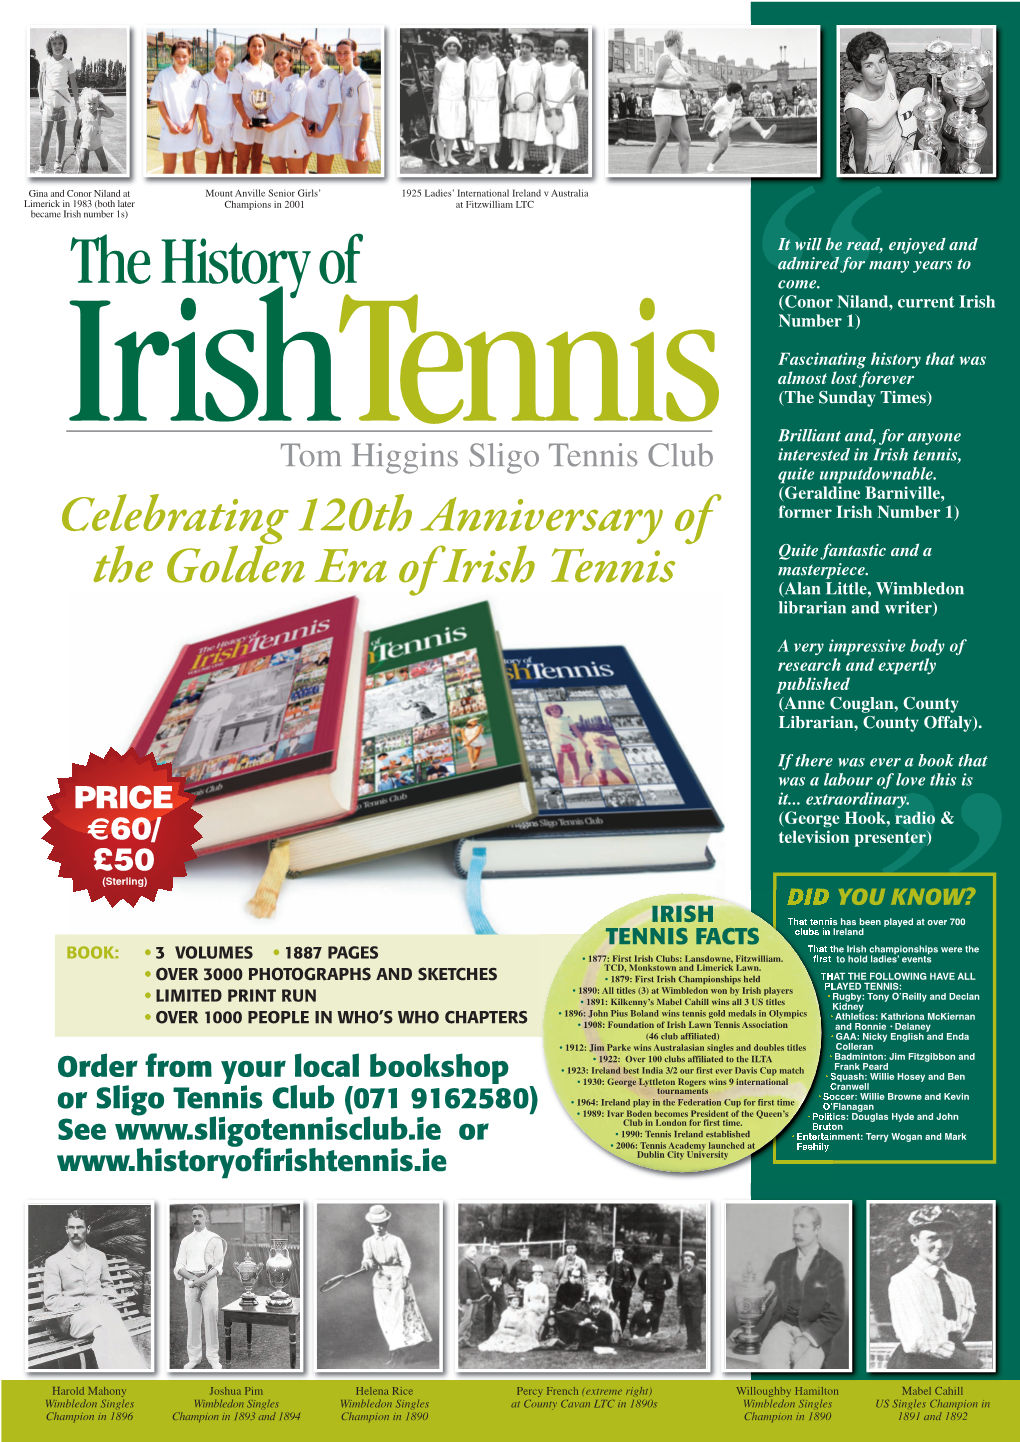 Irish Tennis Facts